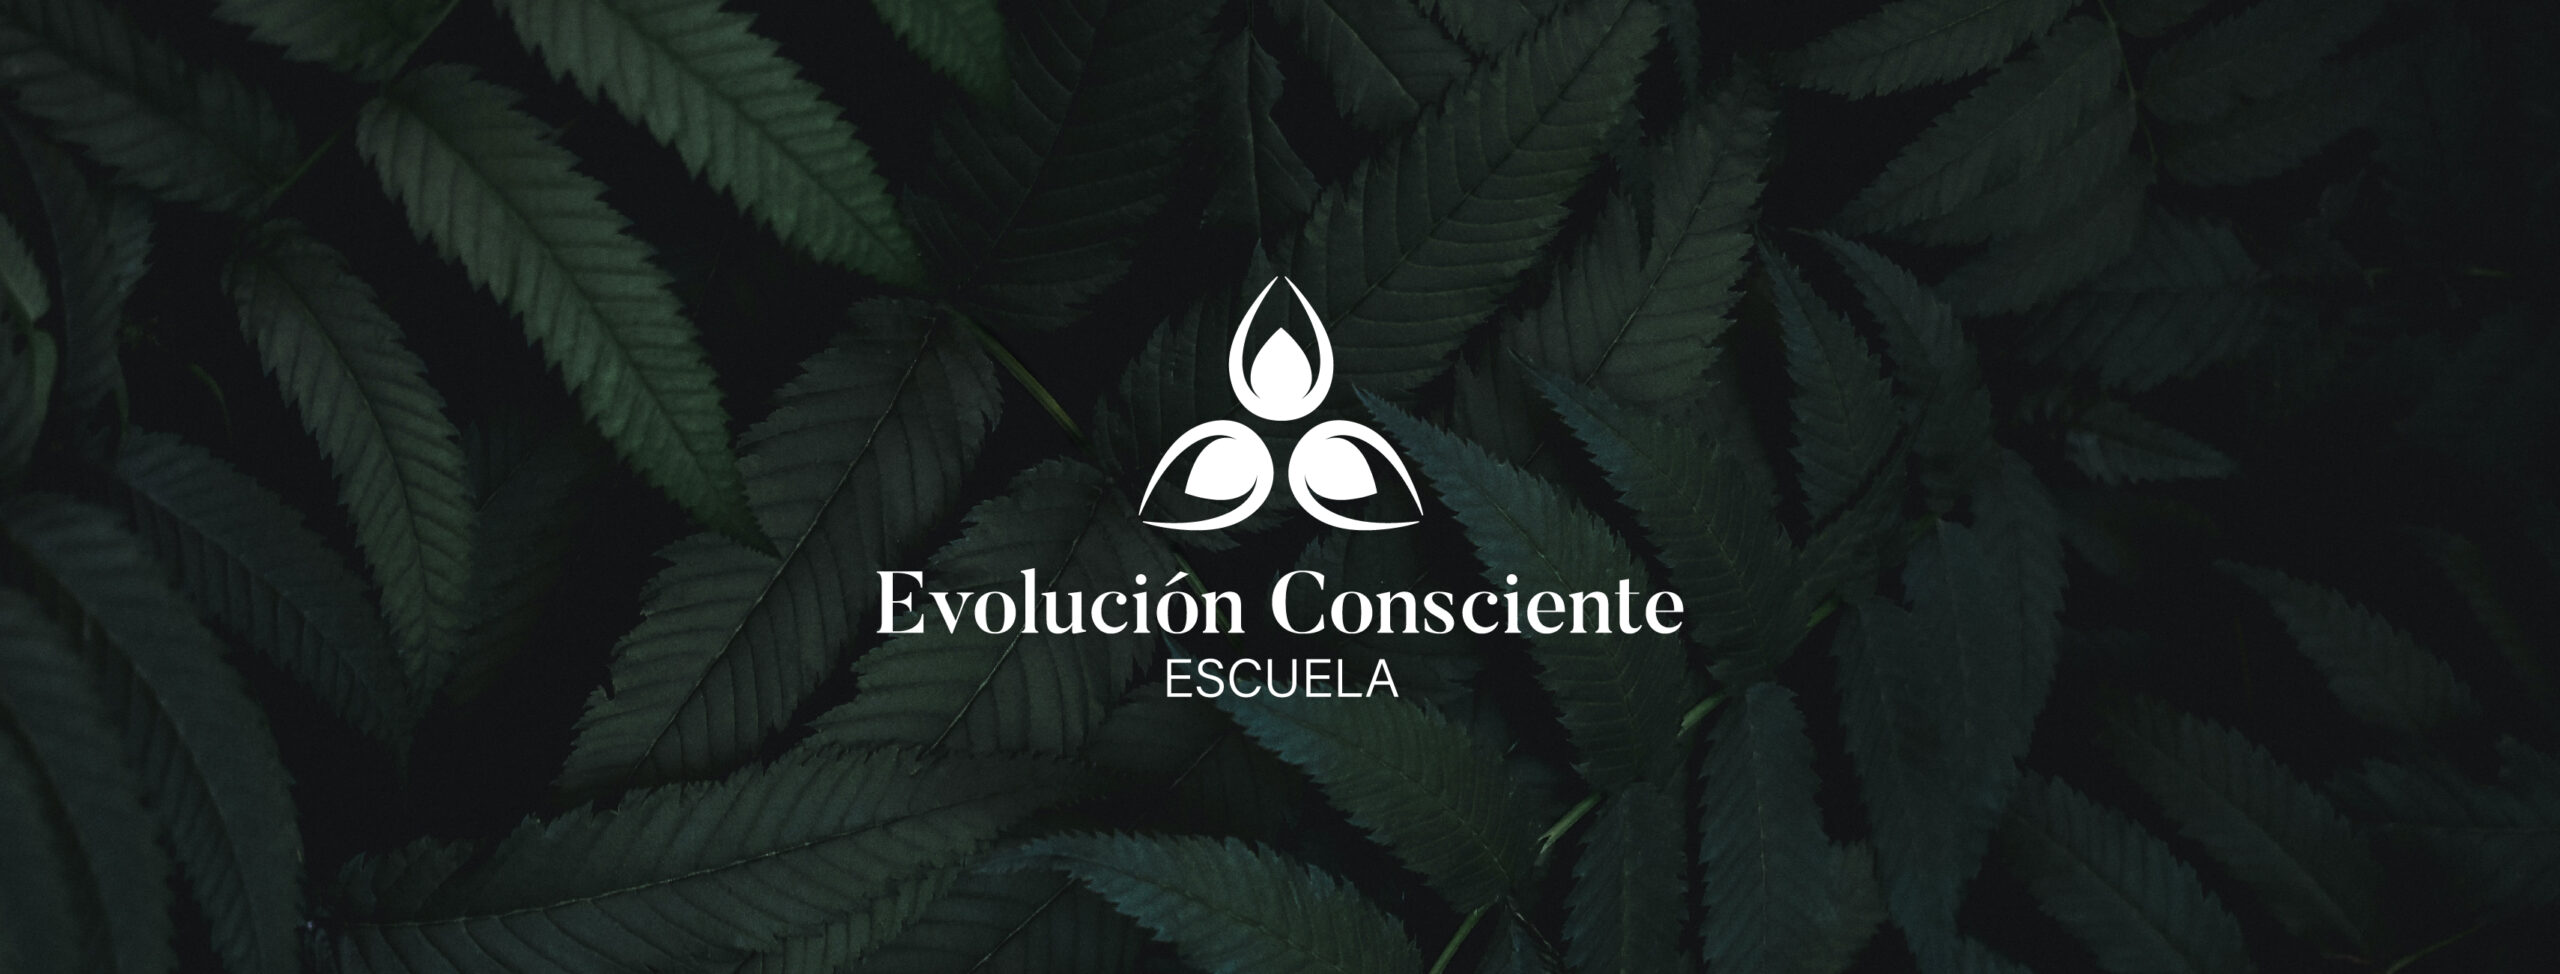 Banner Escuela Evolucion Consciente Movil